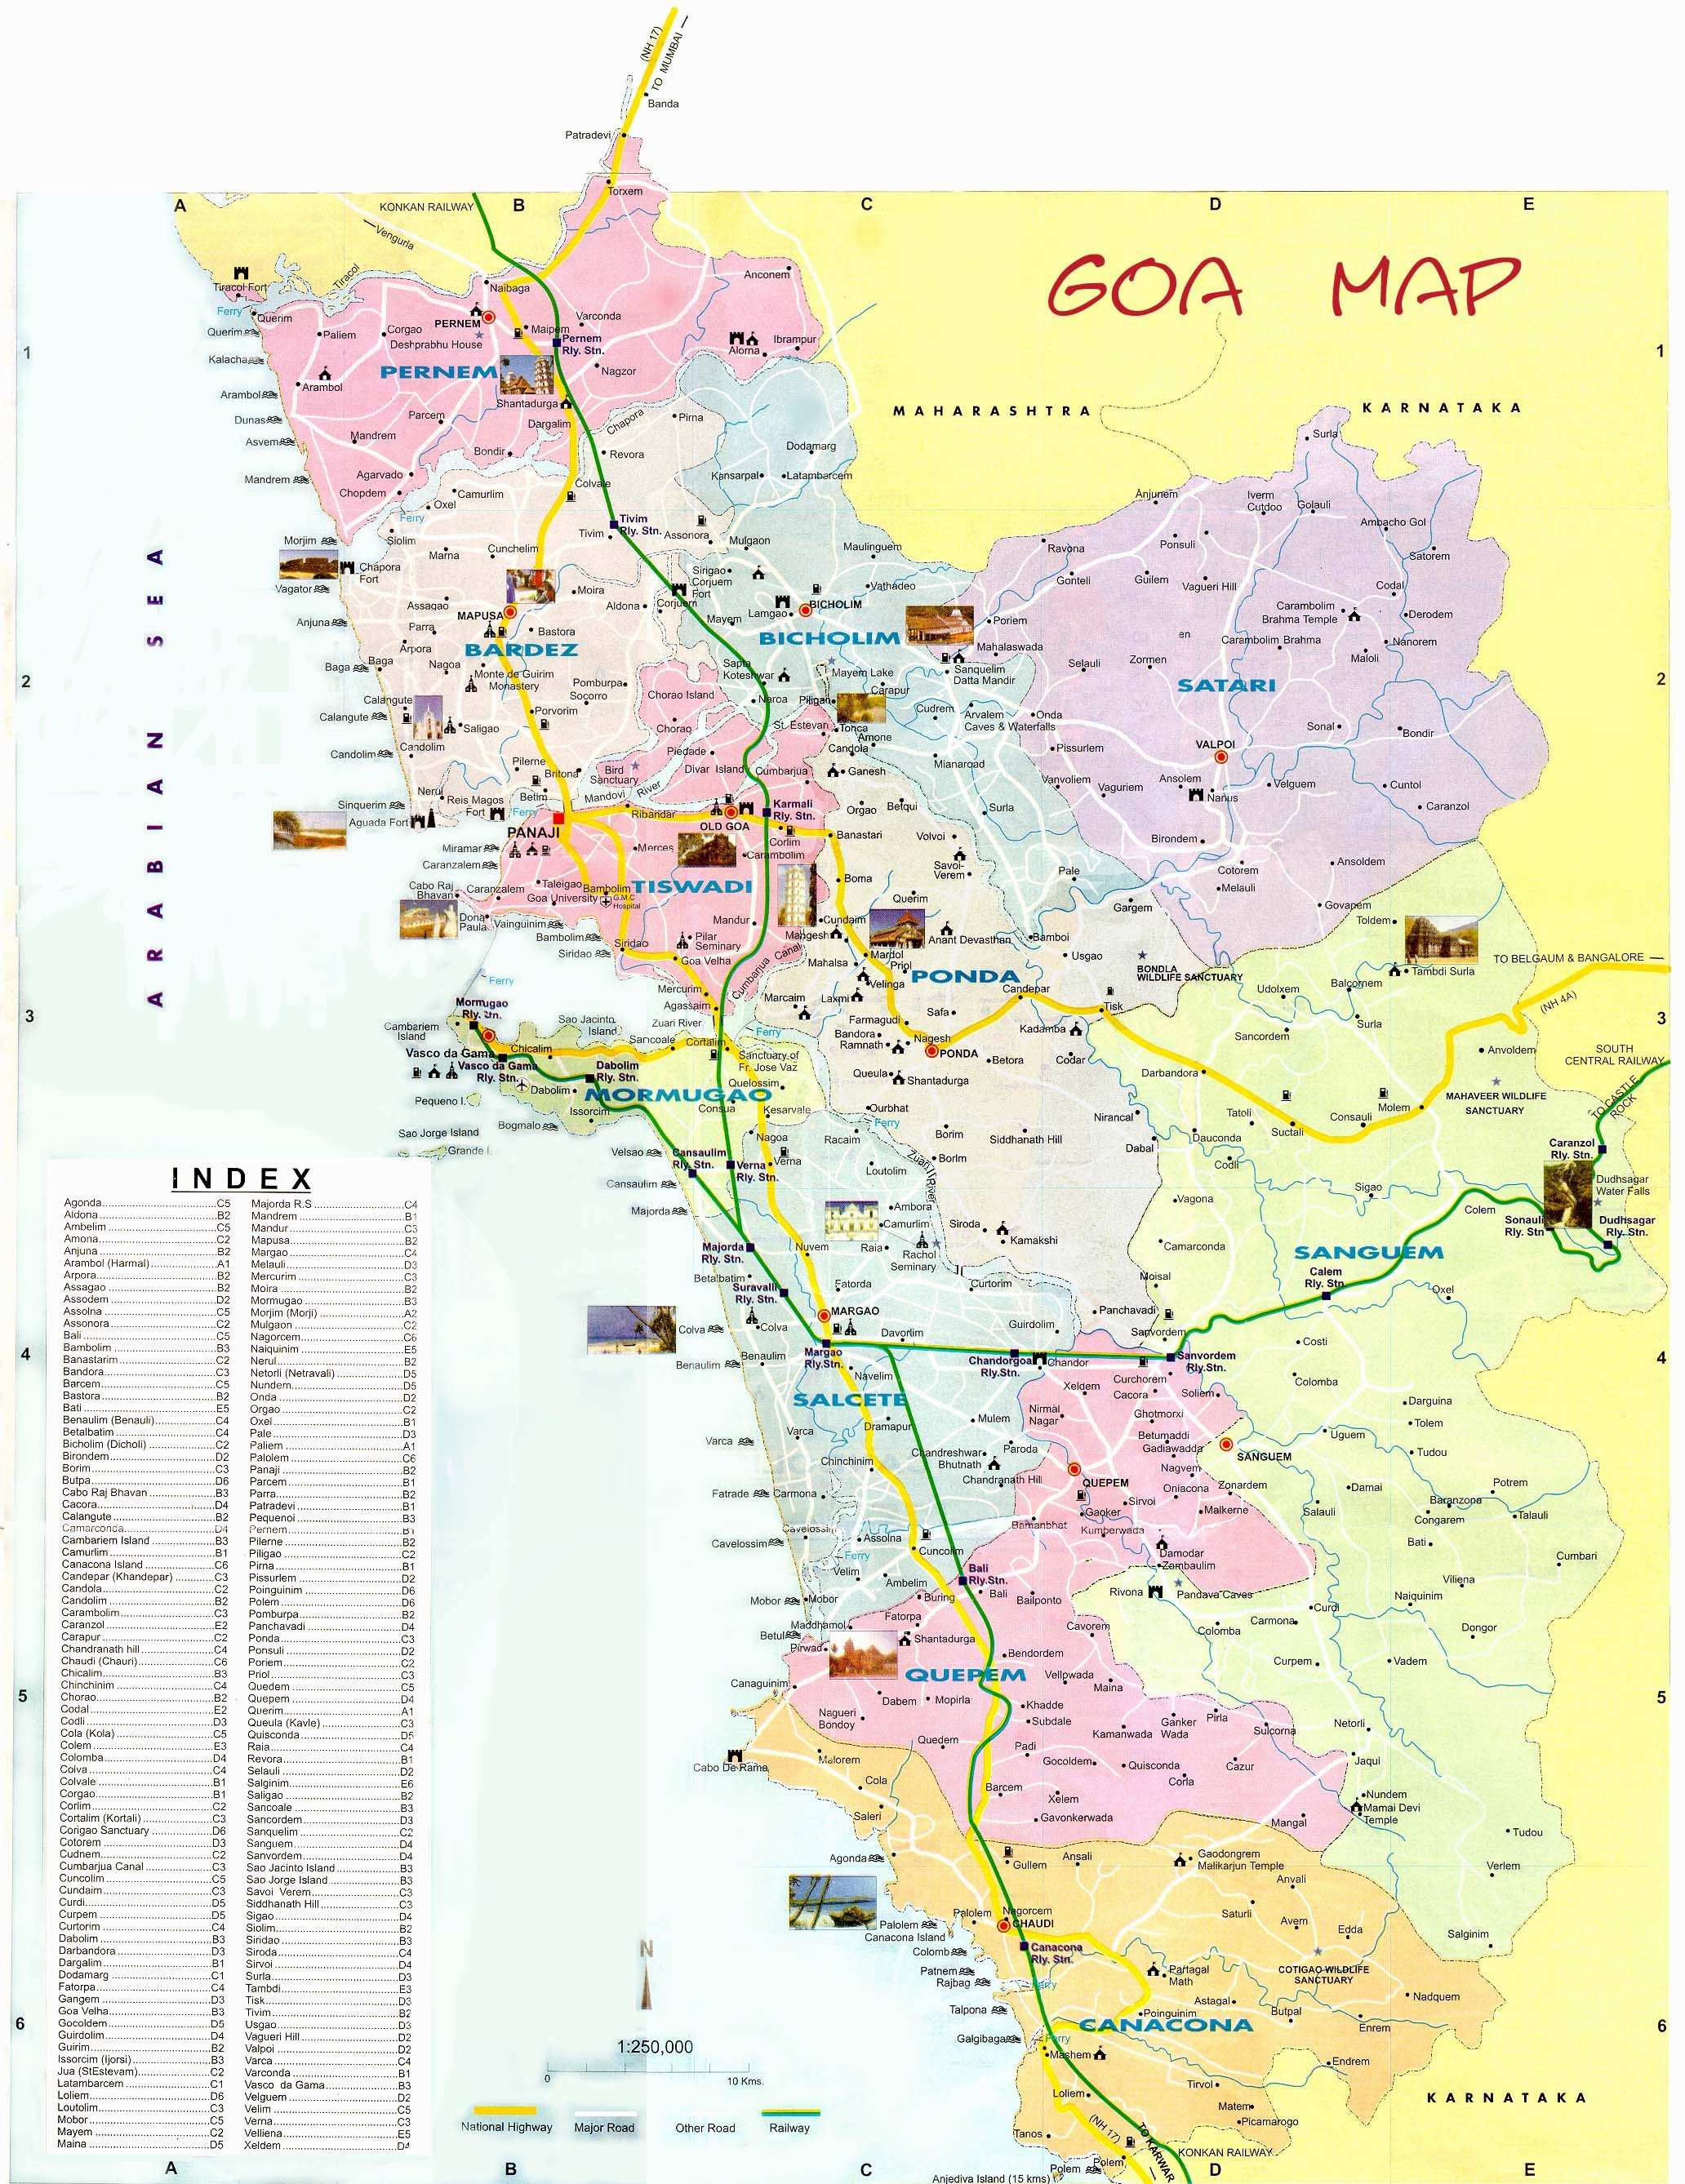 tourist map of north goa